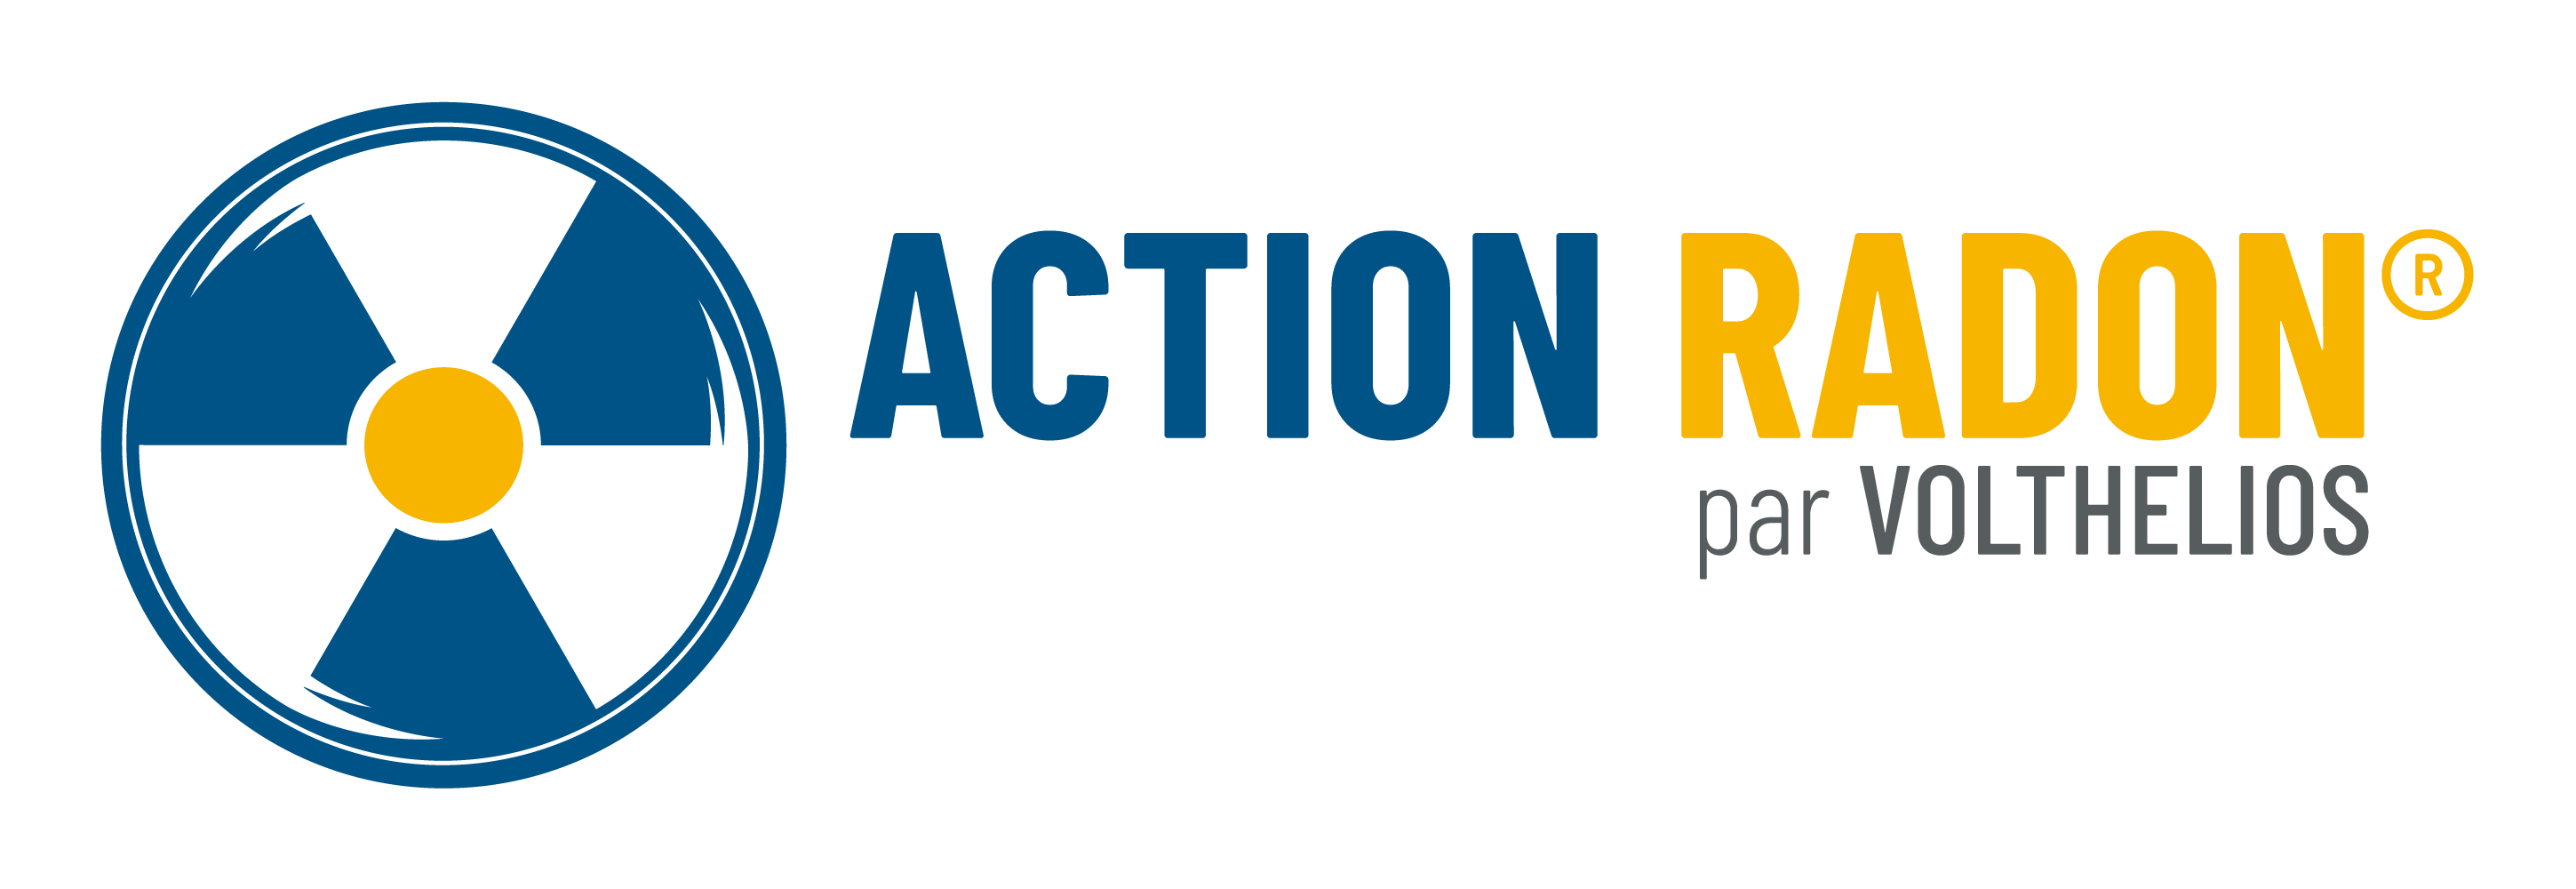 Logo-Action-Radon-rvb_transparent